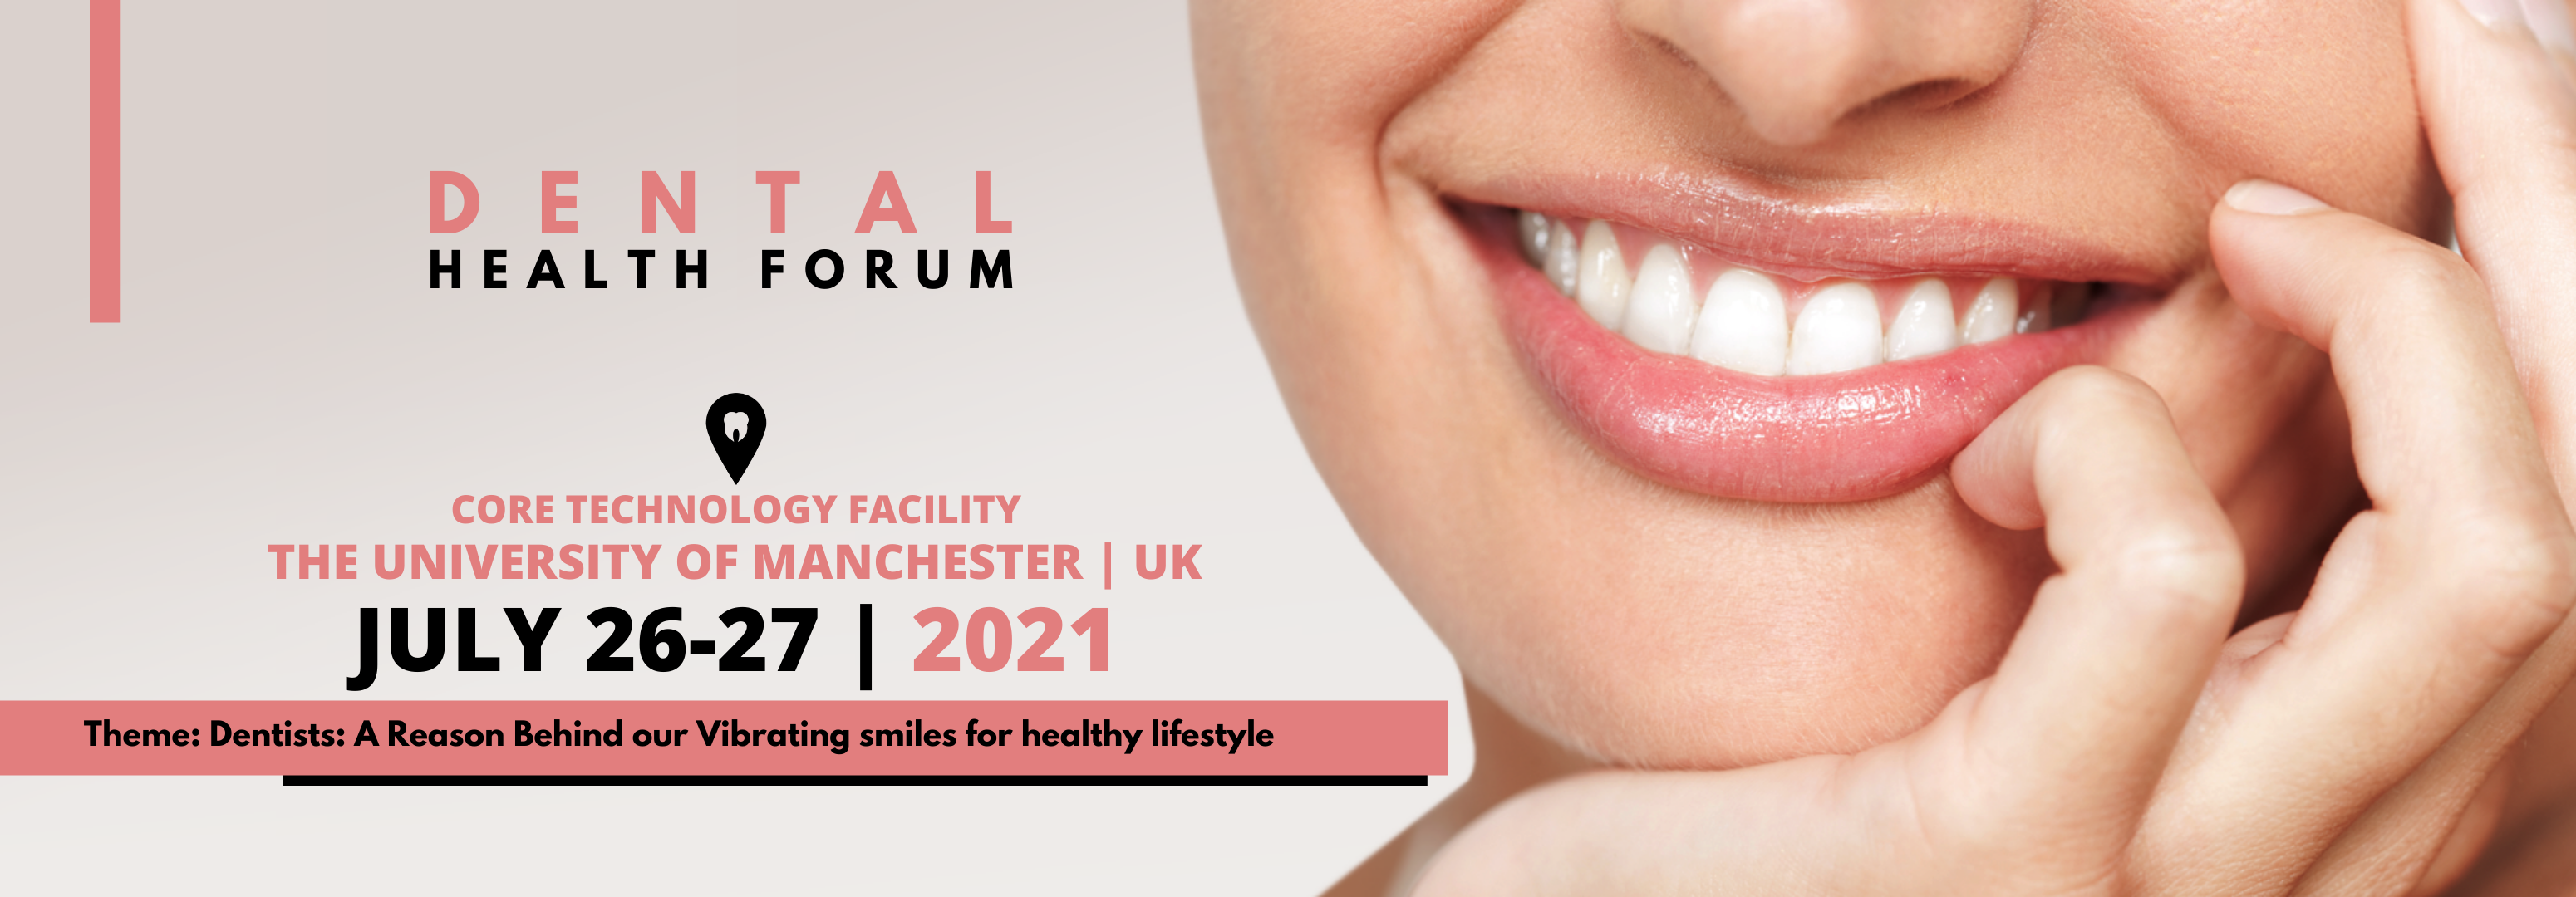 International Conference on Dental Health Forum, Manchester, London, United Kingdom